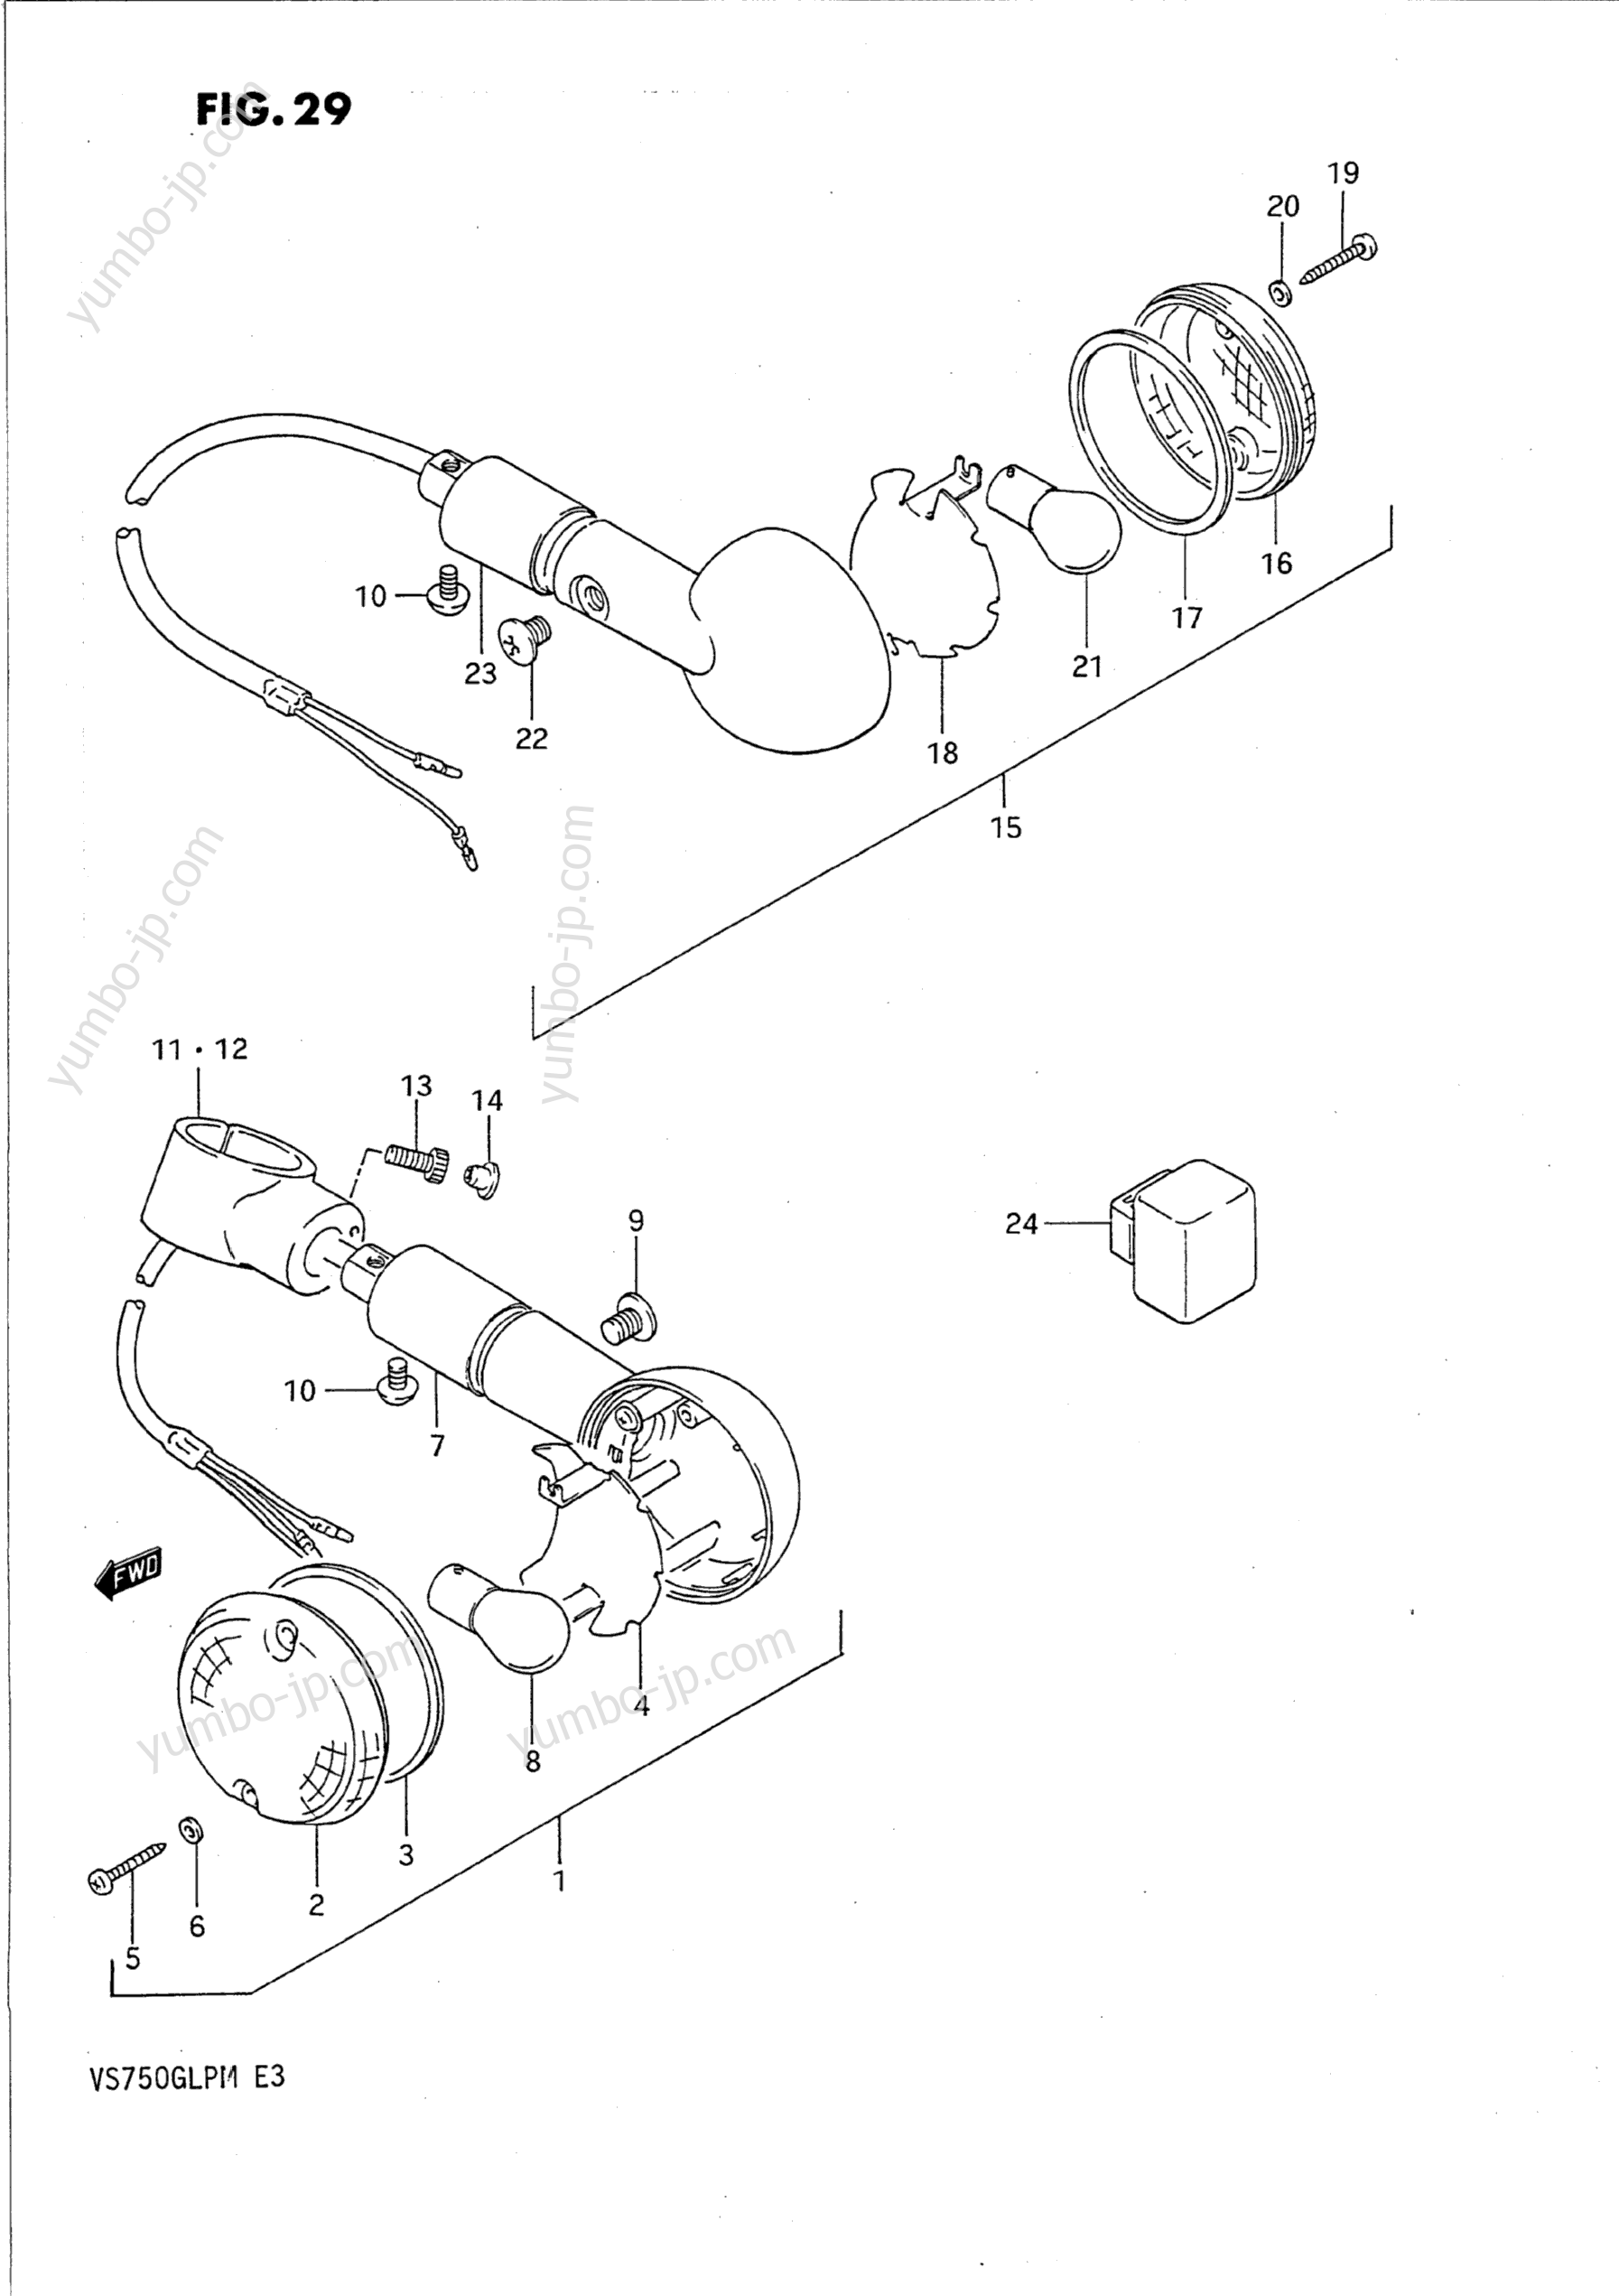 TURN SIGNAL LAMP for motorcycles SUZUKI Intruder (VS750GLP) 1989 year